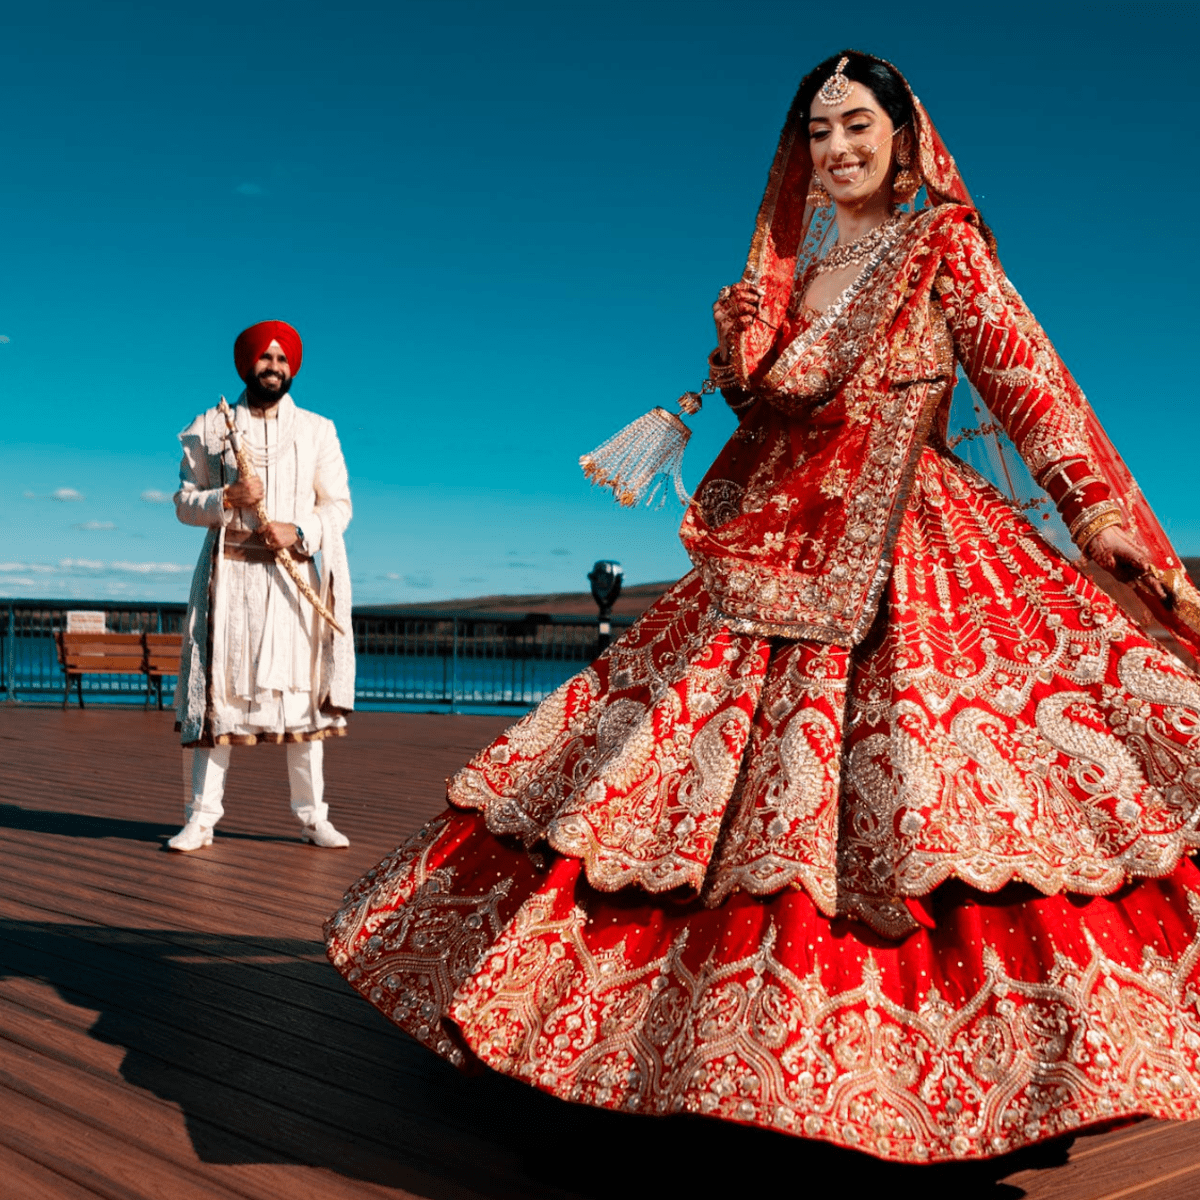 Heavy Indian Bridal Lehenga Shirt for Indian Bridal Wear – Nameera by Farooq